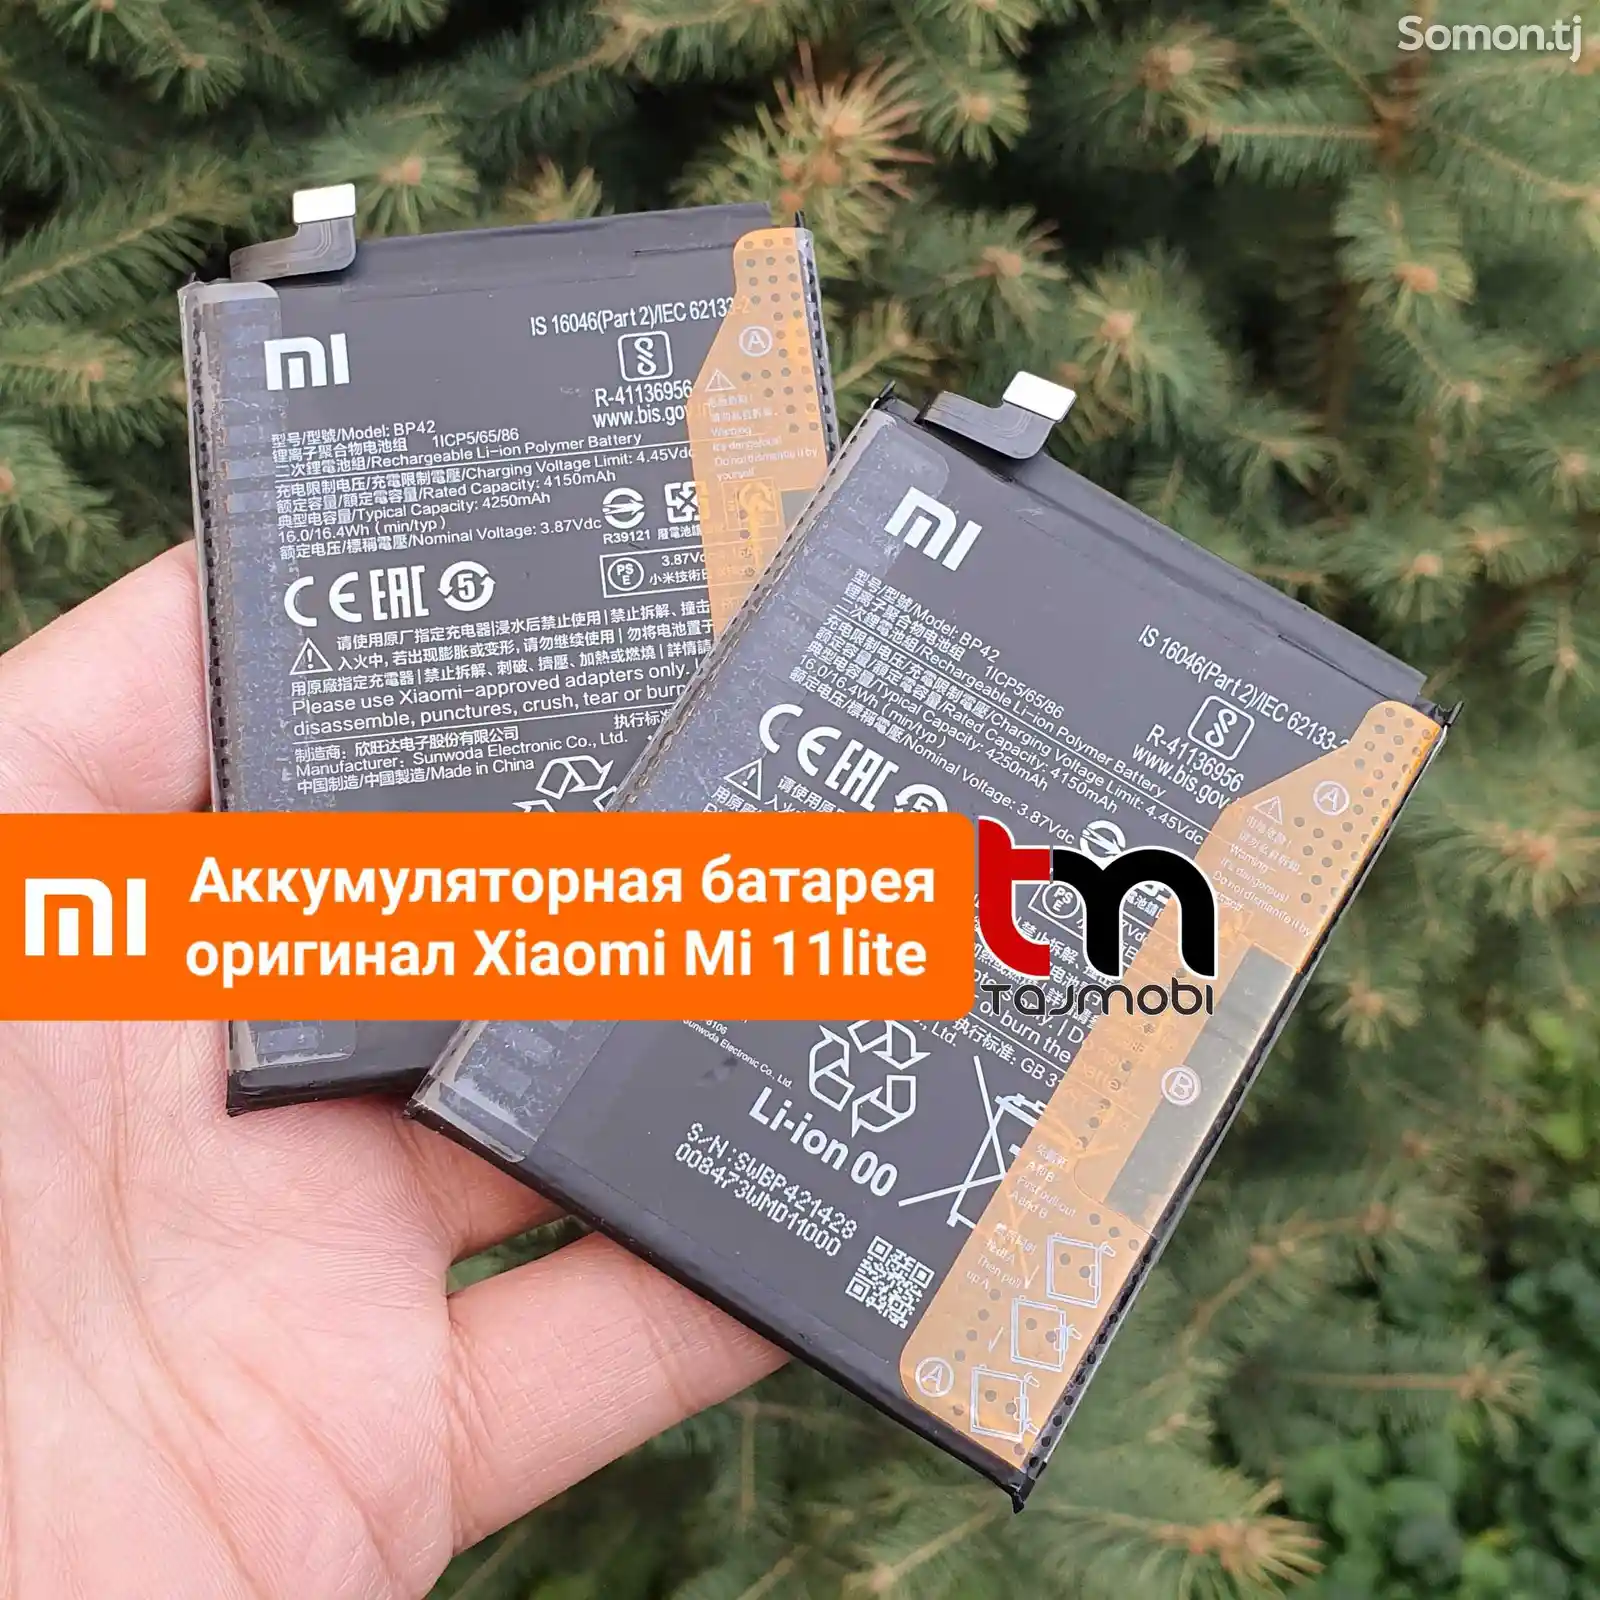 Аккумуляторная батарея от Xiaomi Mi 11lite